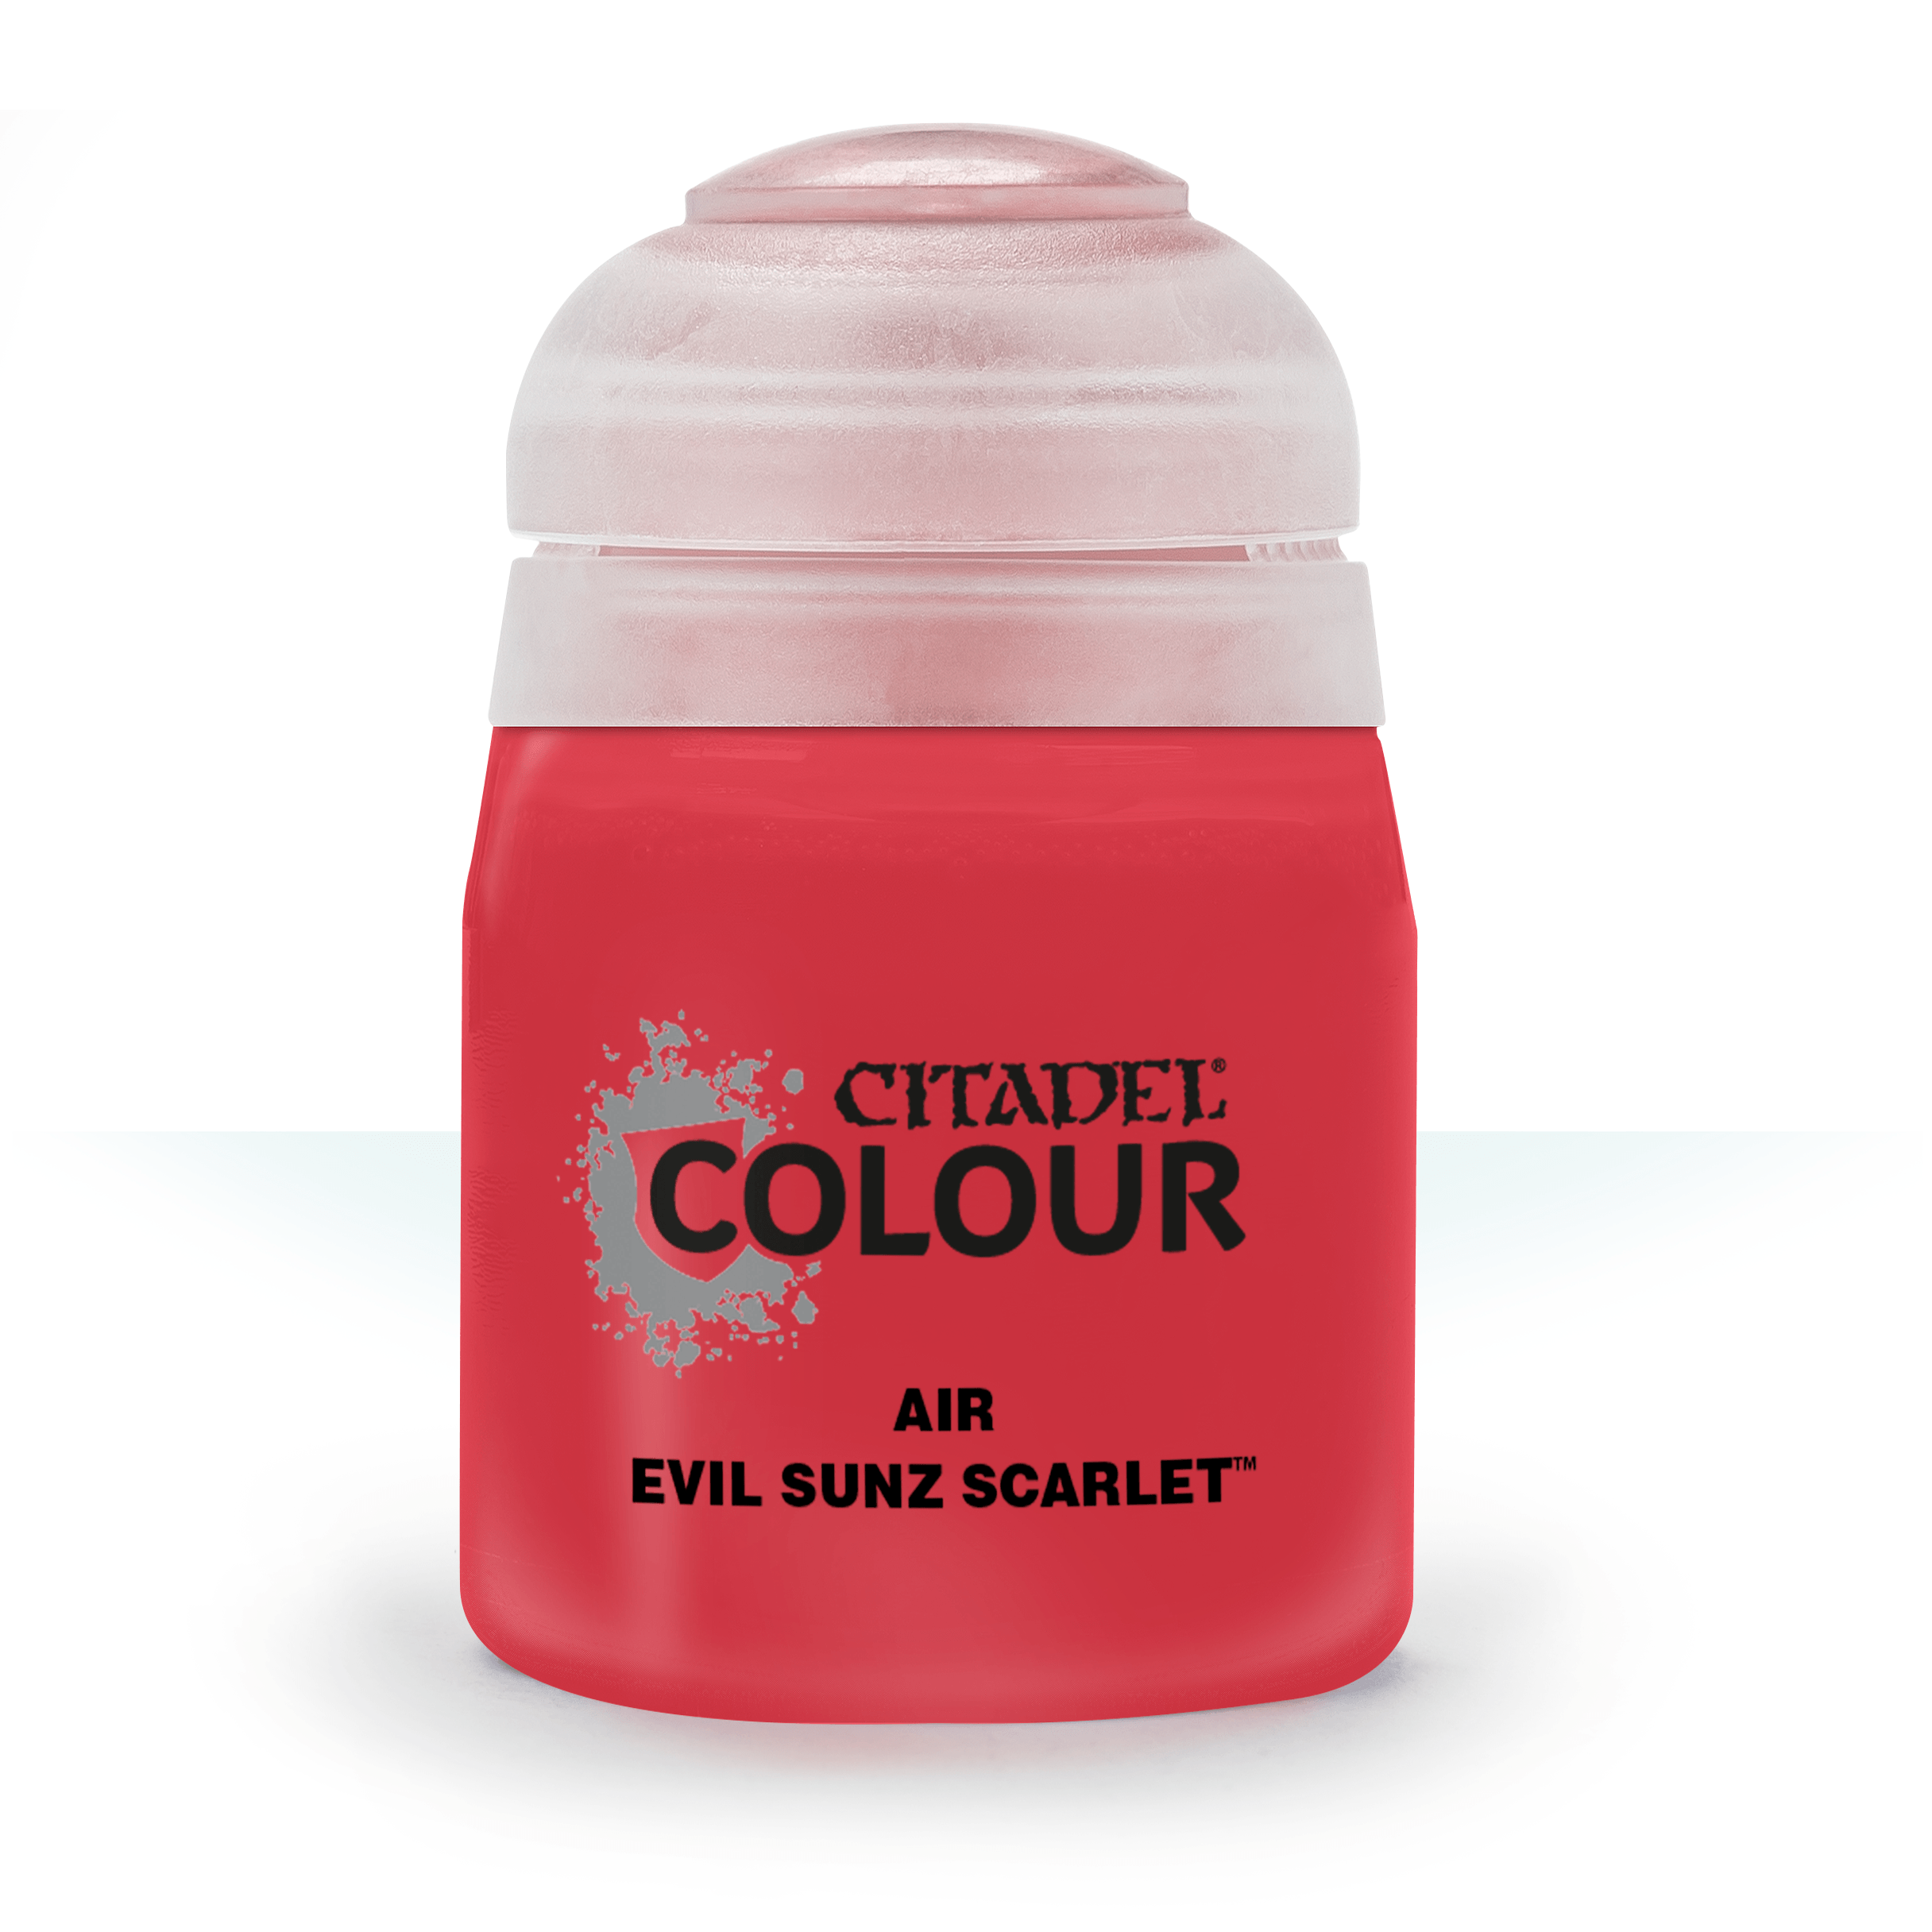 Air Evil Sunz Scarlet - Citadel Colour - 24 ml